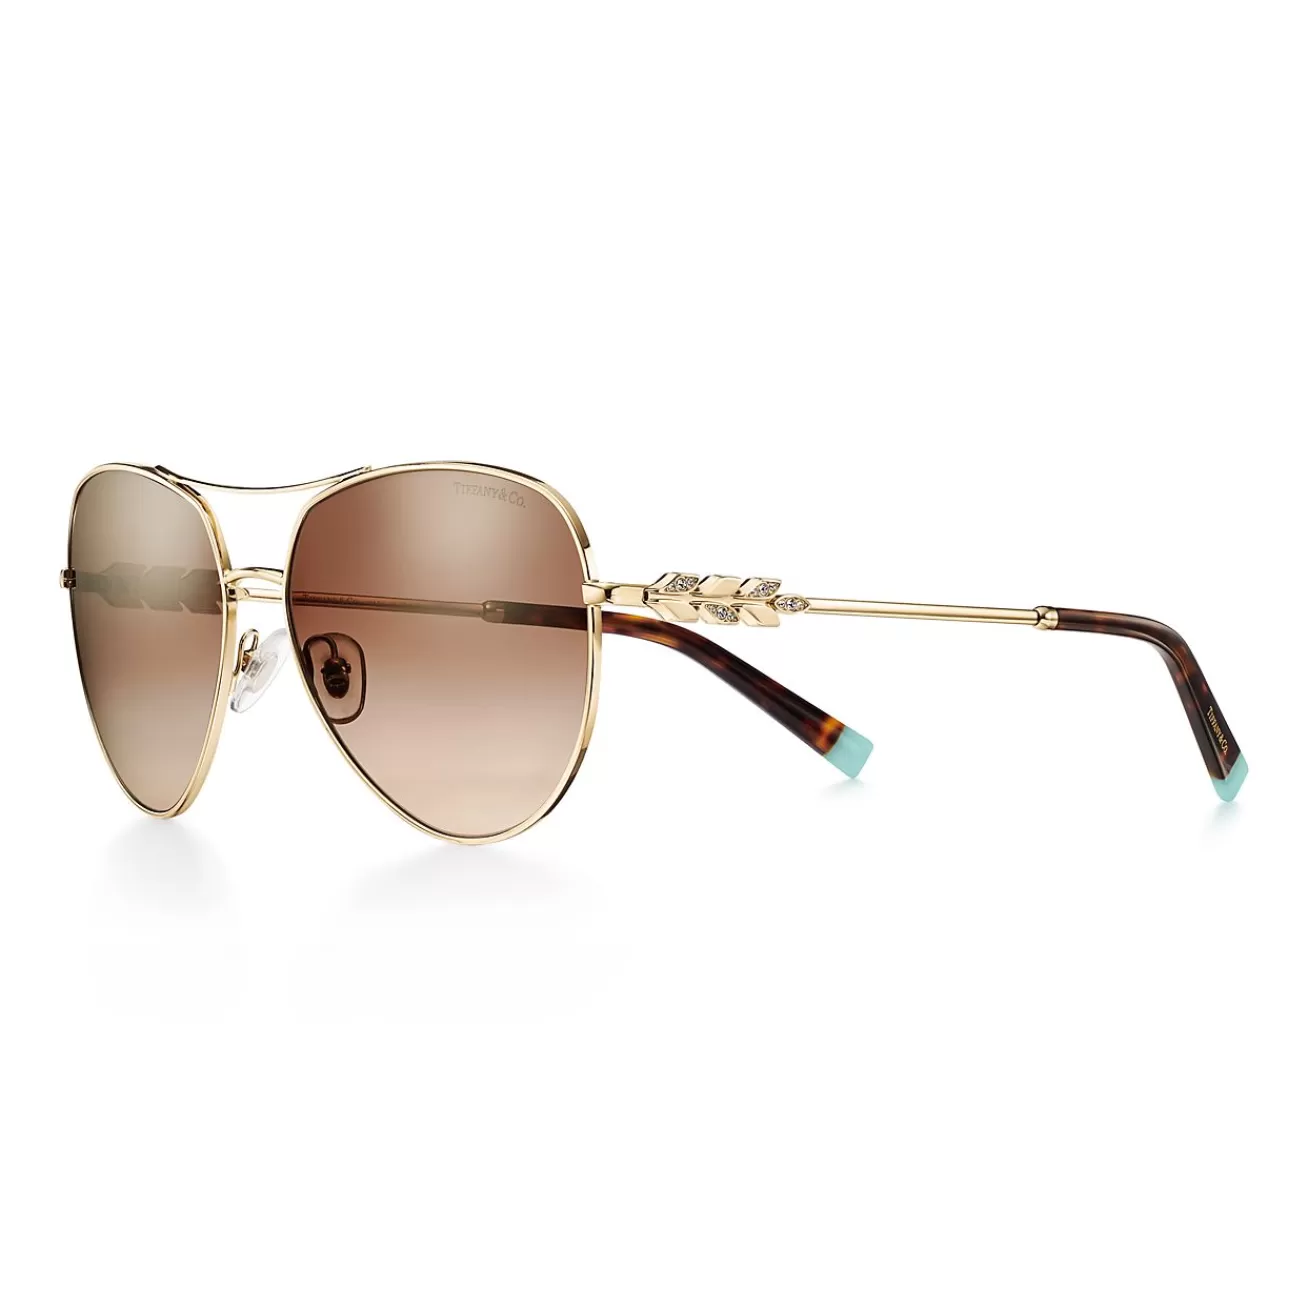 Tiffany & Co. Tiffany Victoria® Sunglasses in Pale Gold-colored Metal with Brown Lenses | ^ Tiffany Victoria® | Sunglasses